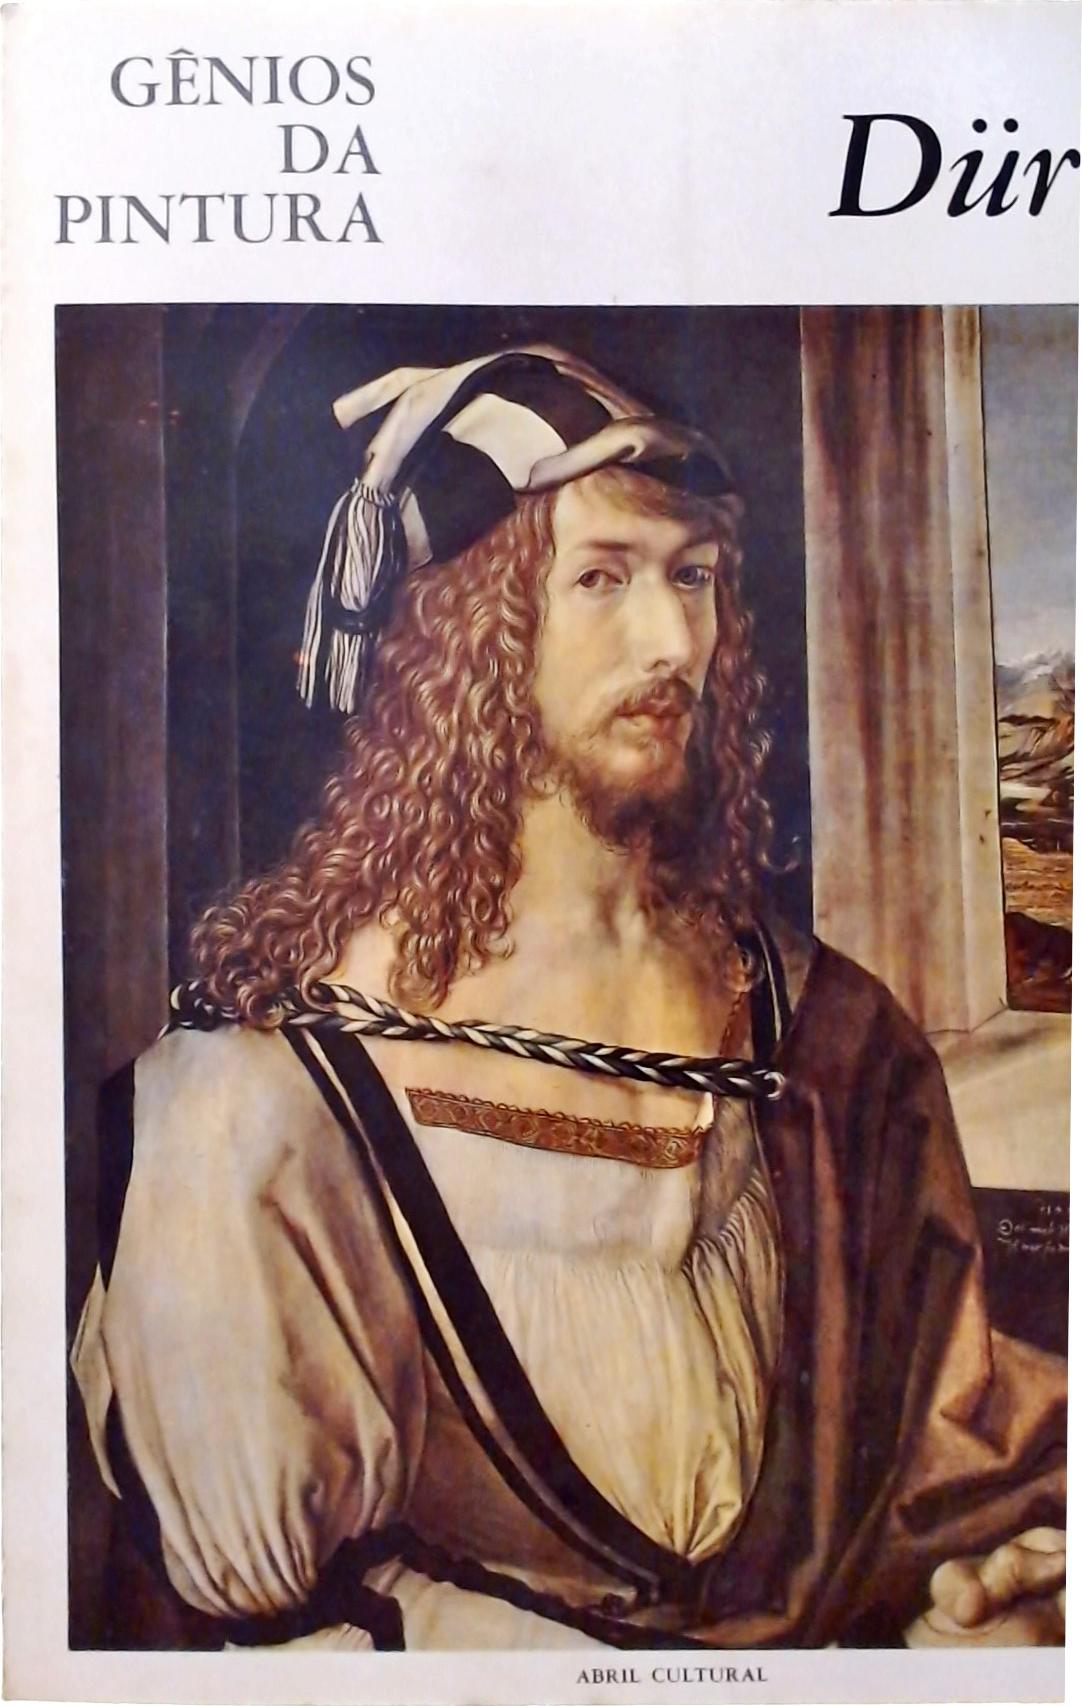 Gênios da Pintura - Dürer